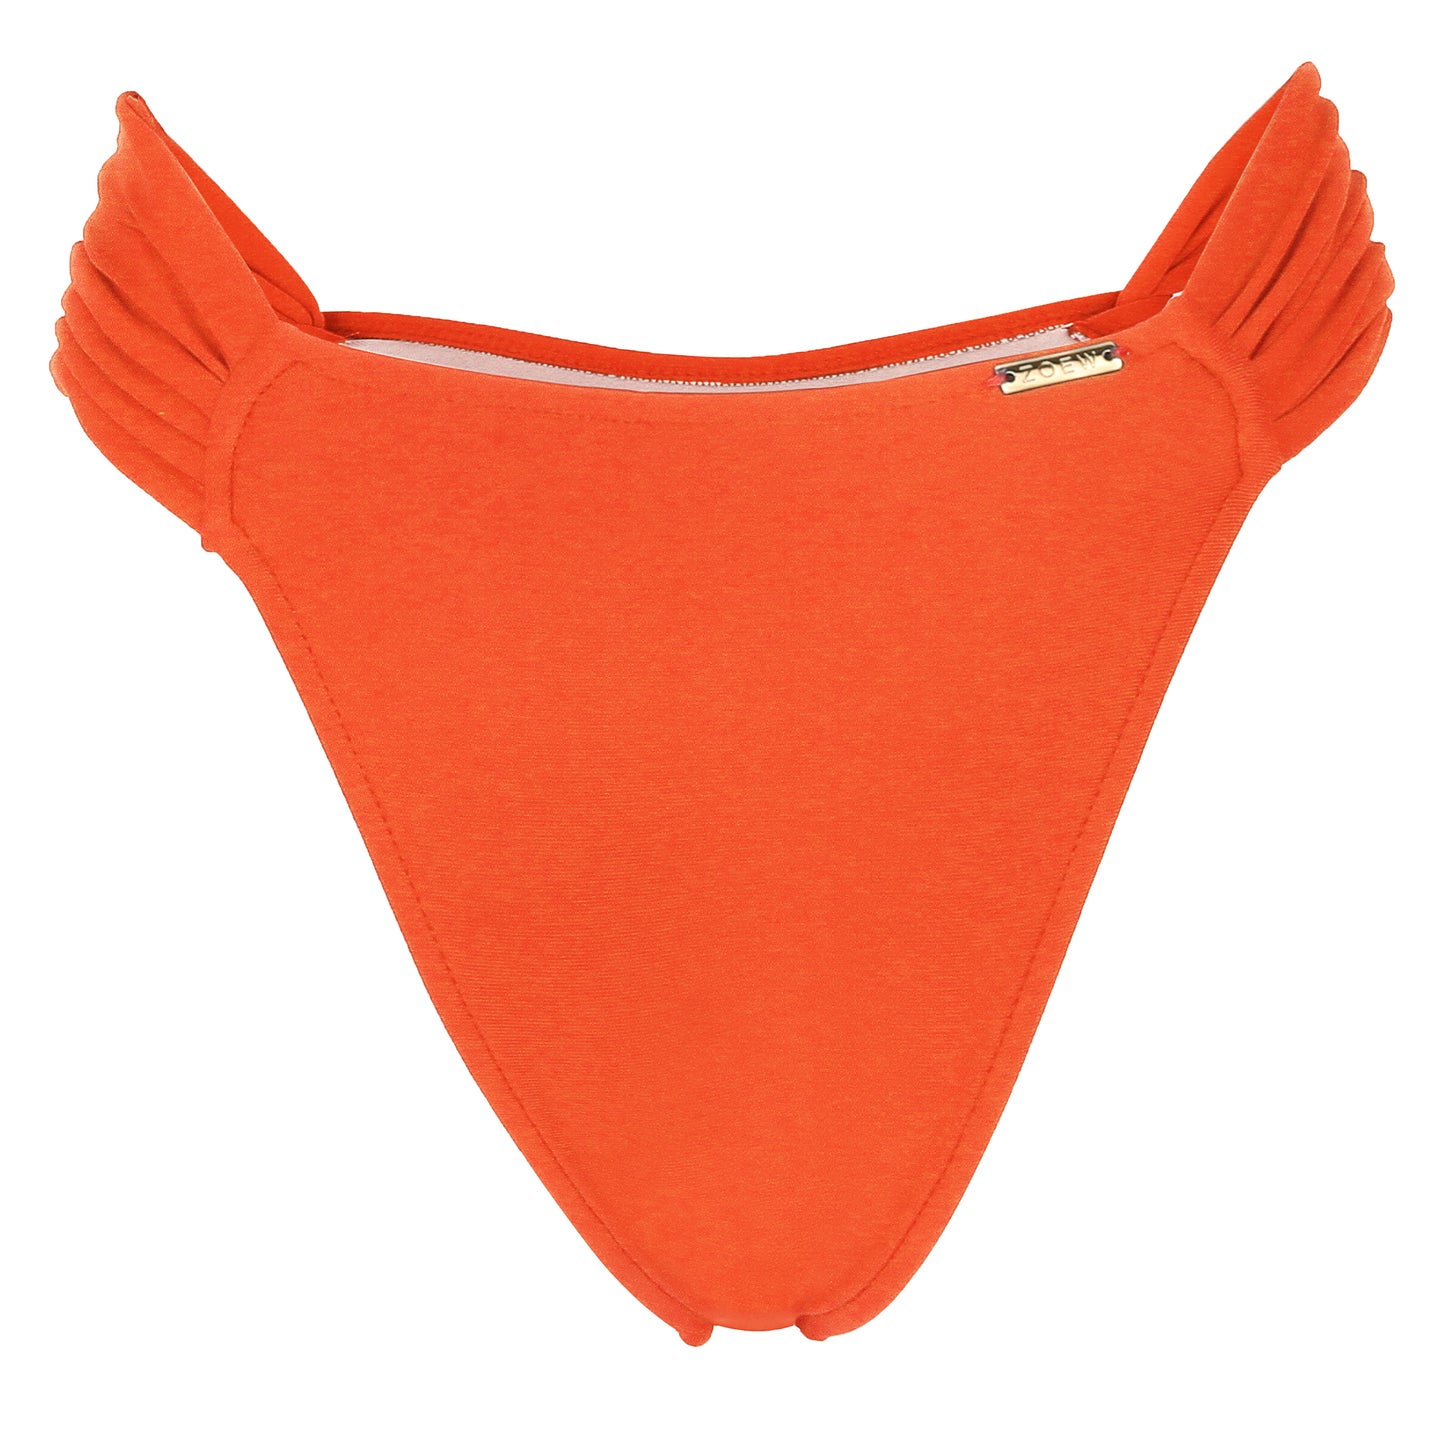 Loop Bikini Bottom in Orange